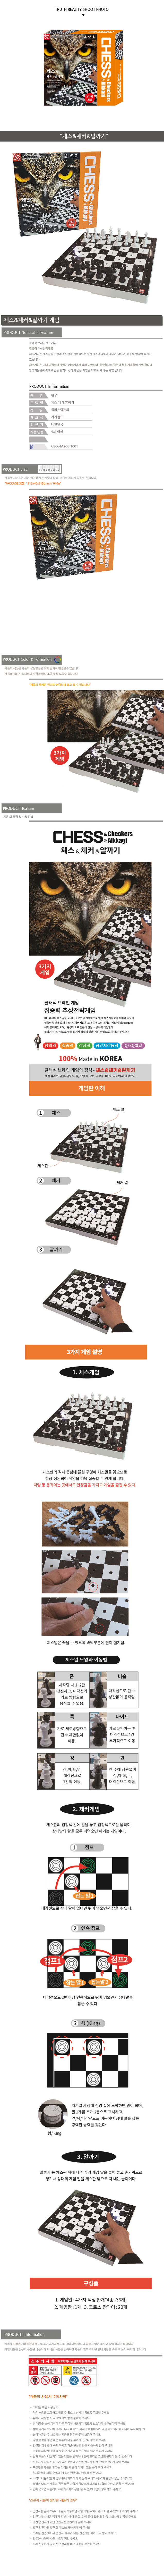 chess3mode.jpg